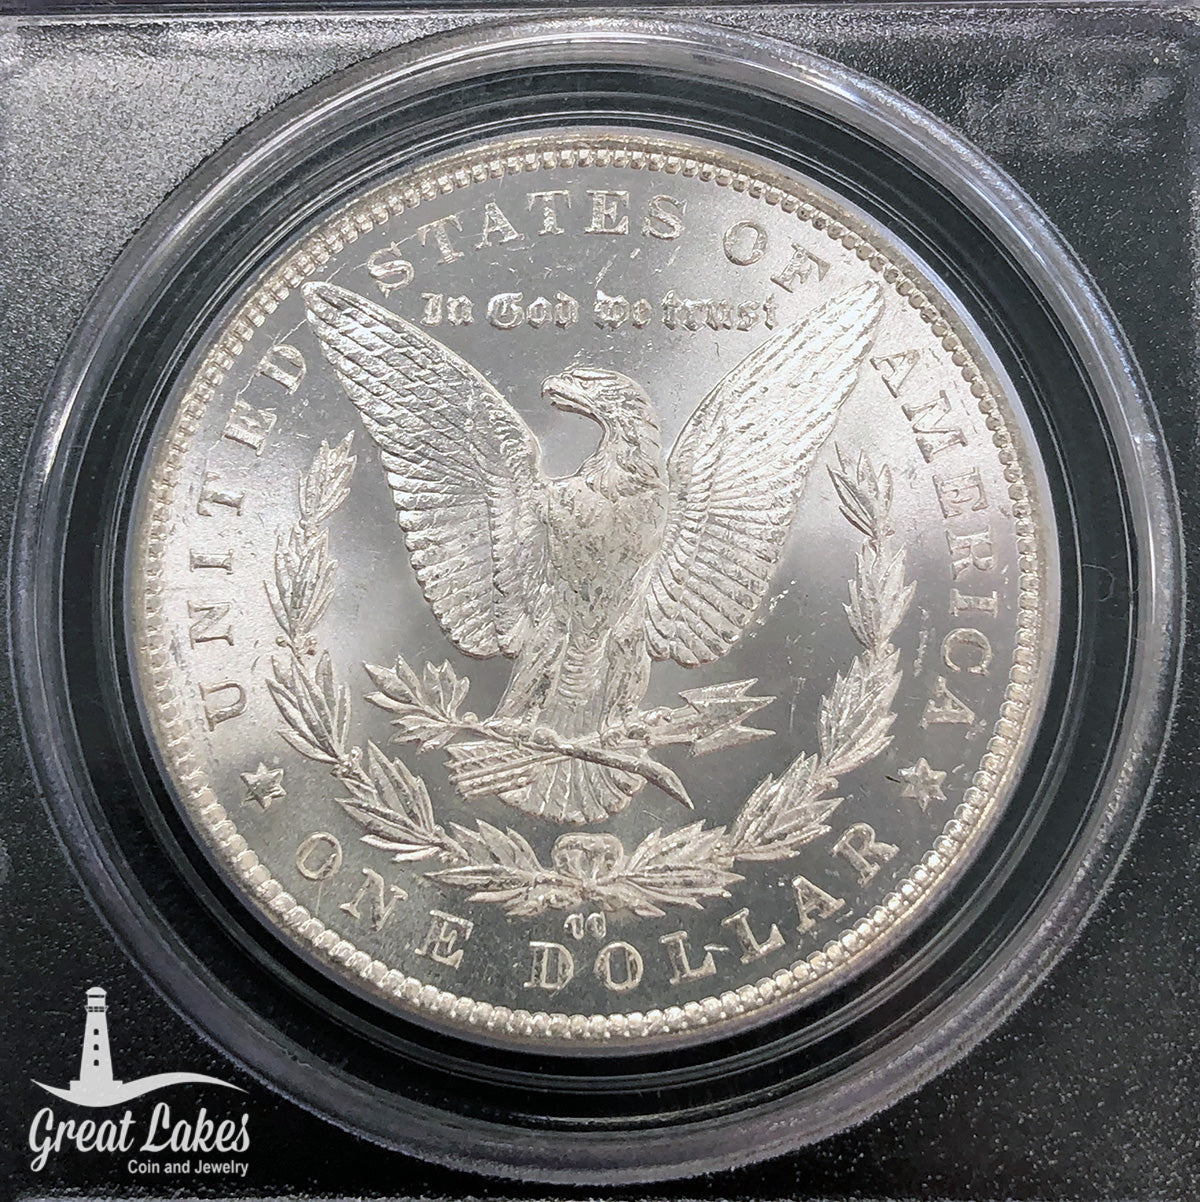 1885-CC Morgan Silver Dollar PCGS MS64